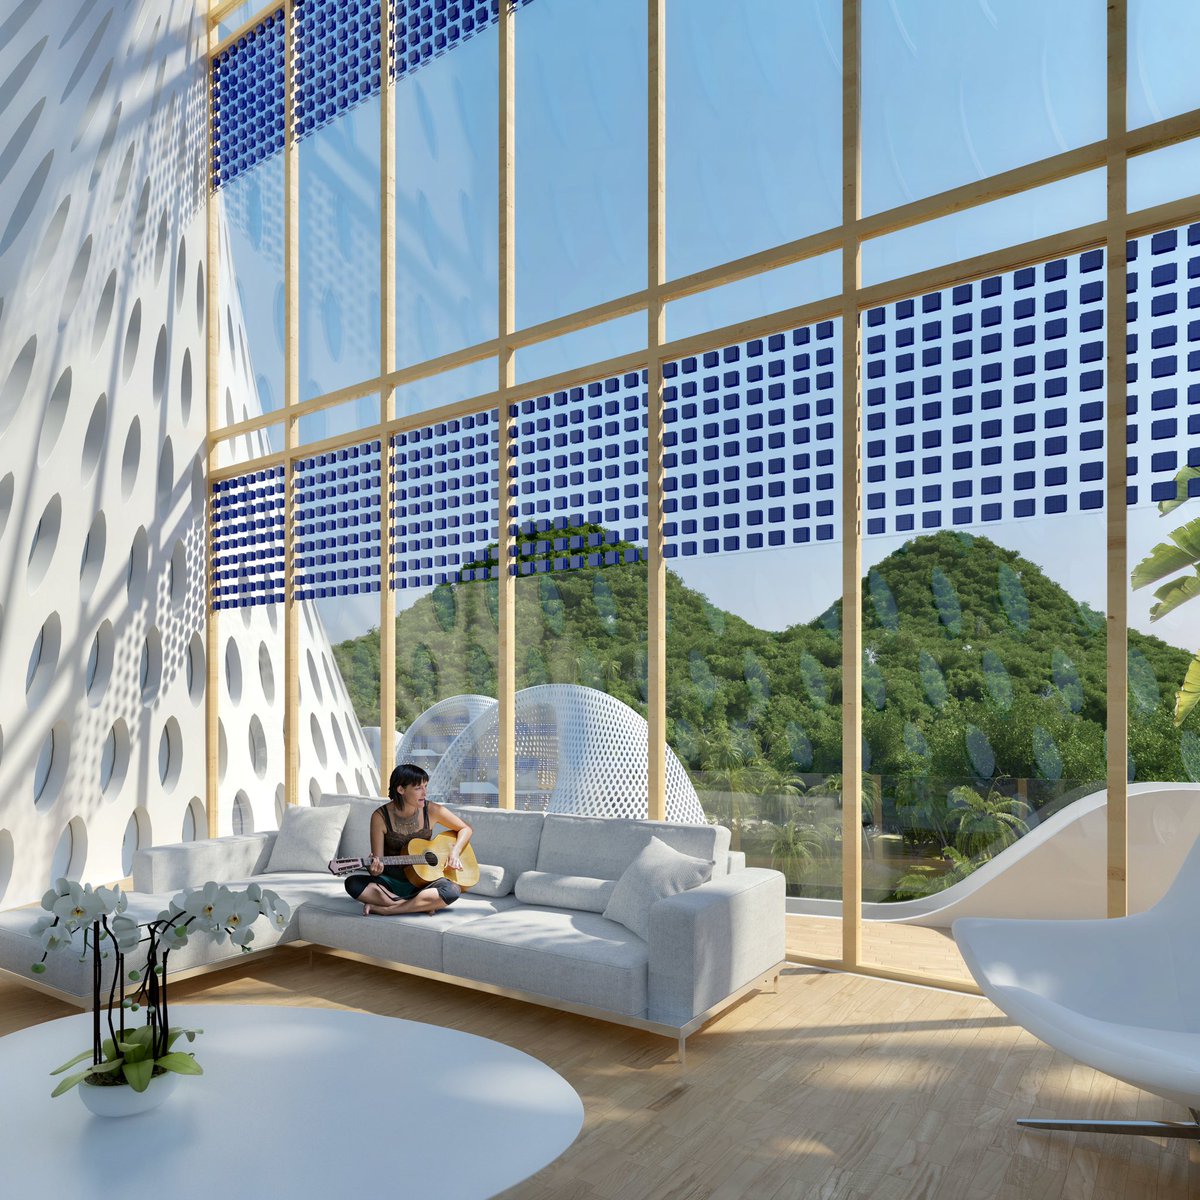 Interior of the Nautilus Eco-Resort by Vincent Callebaut Architectures